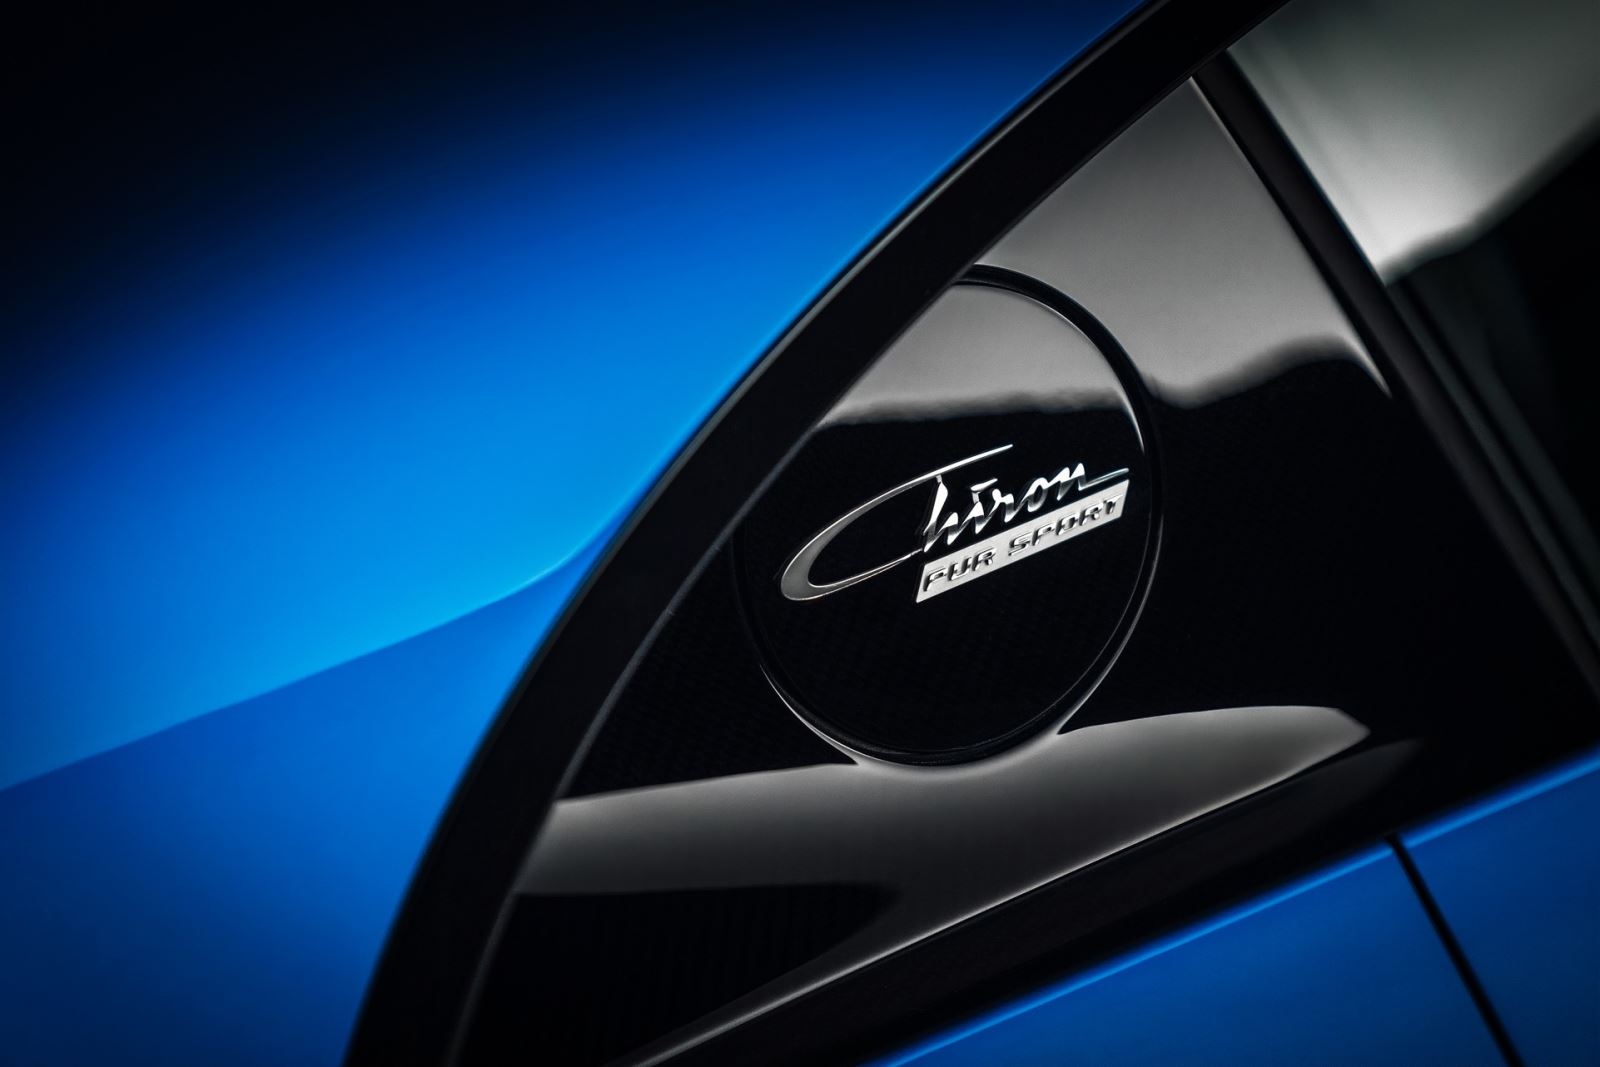 Soi chi tiết siêu xe Bugatti Chiron Pur Sport giá gần 4 triệu USD 12